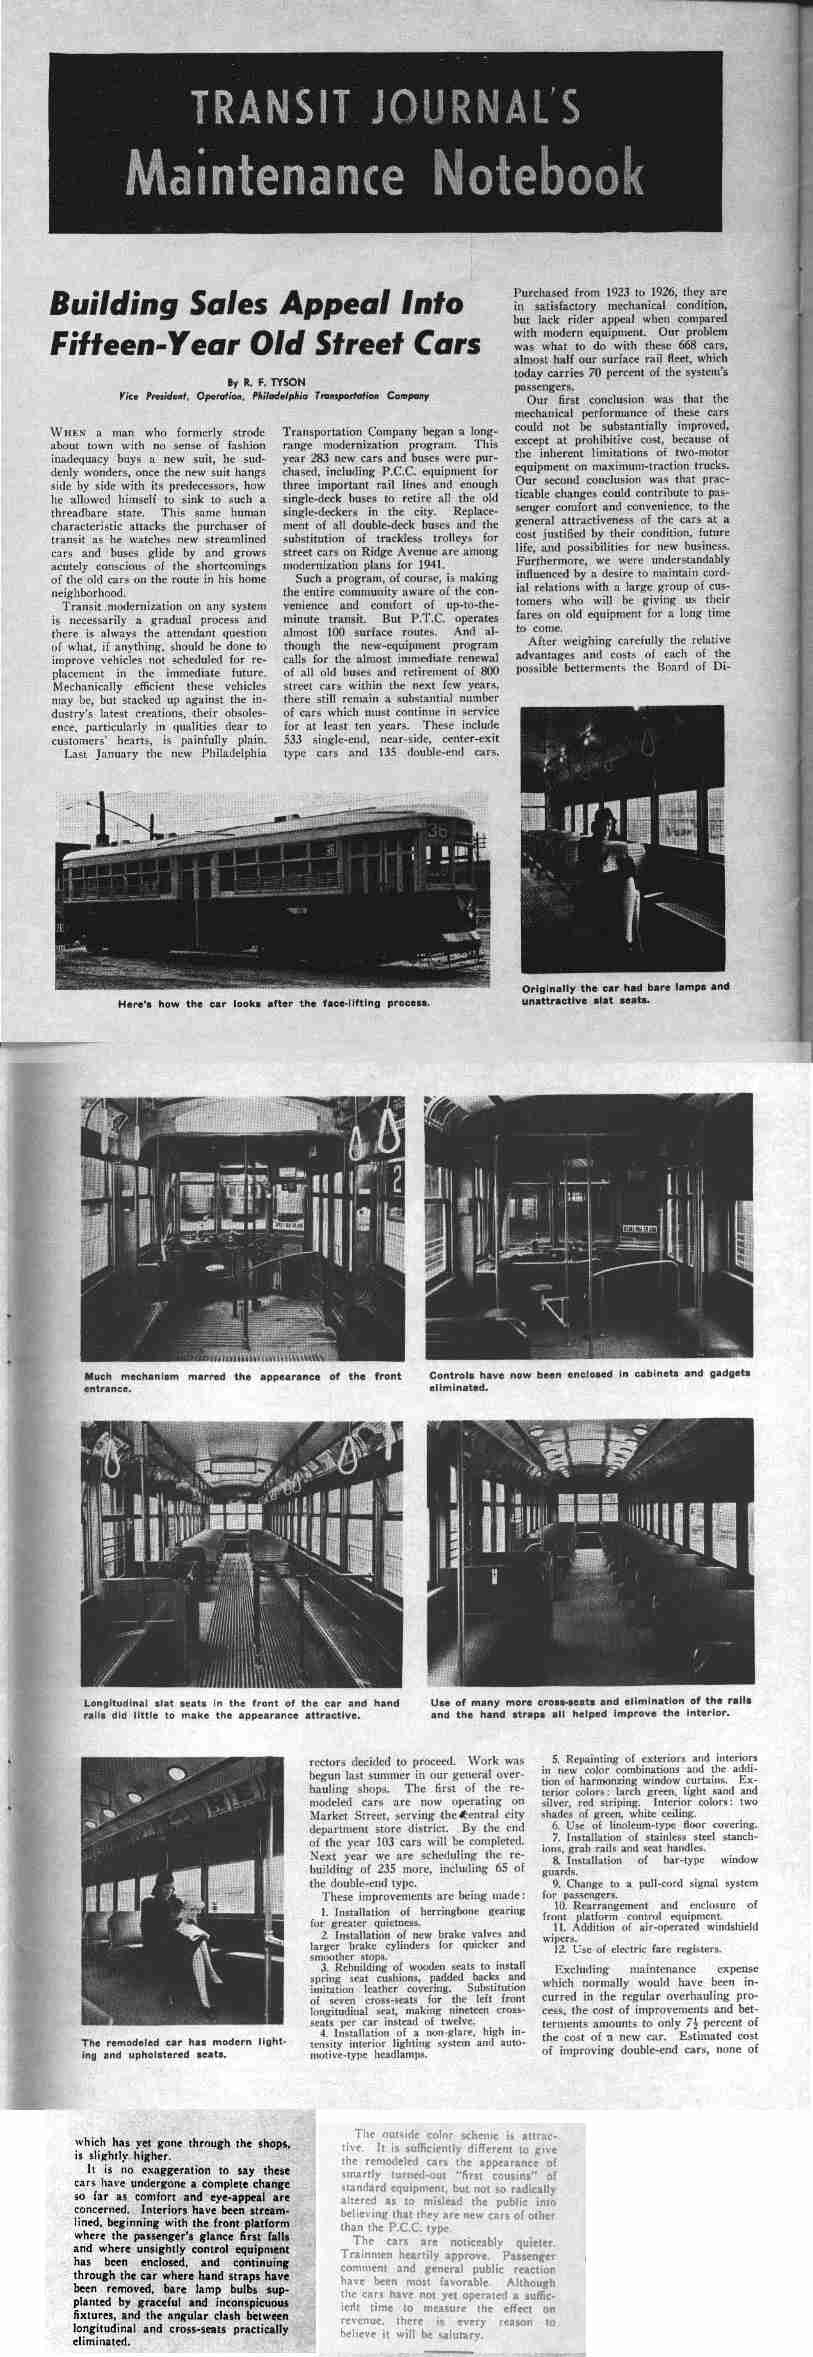 1940 Transit Journal Reprint